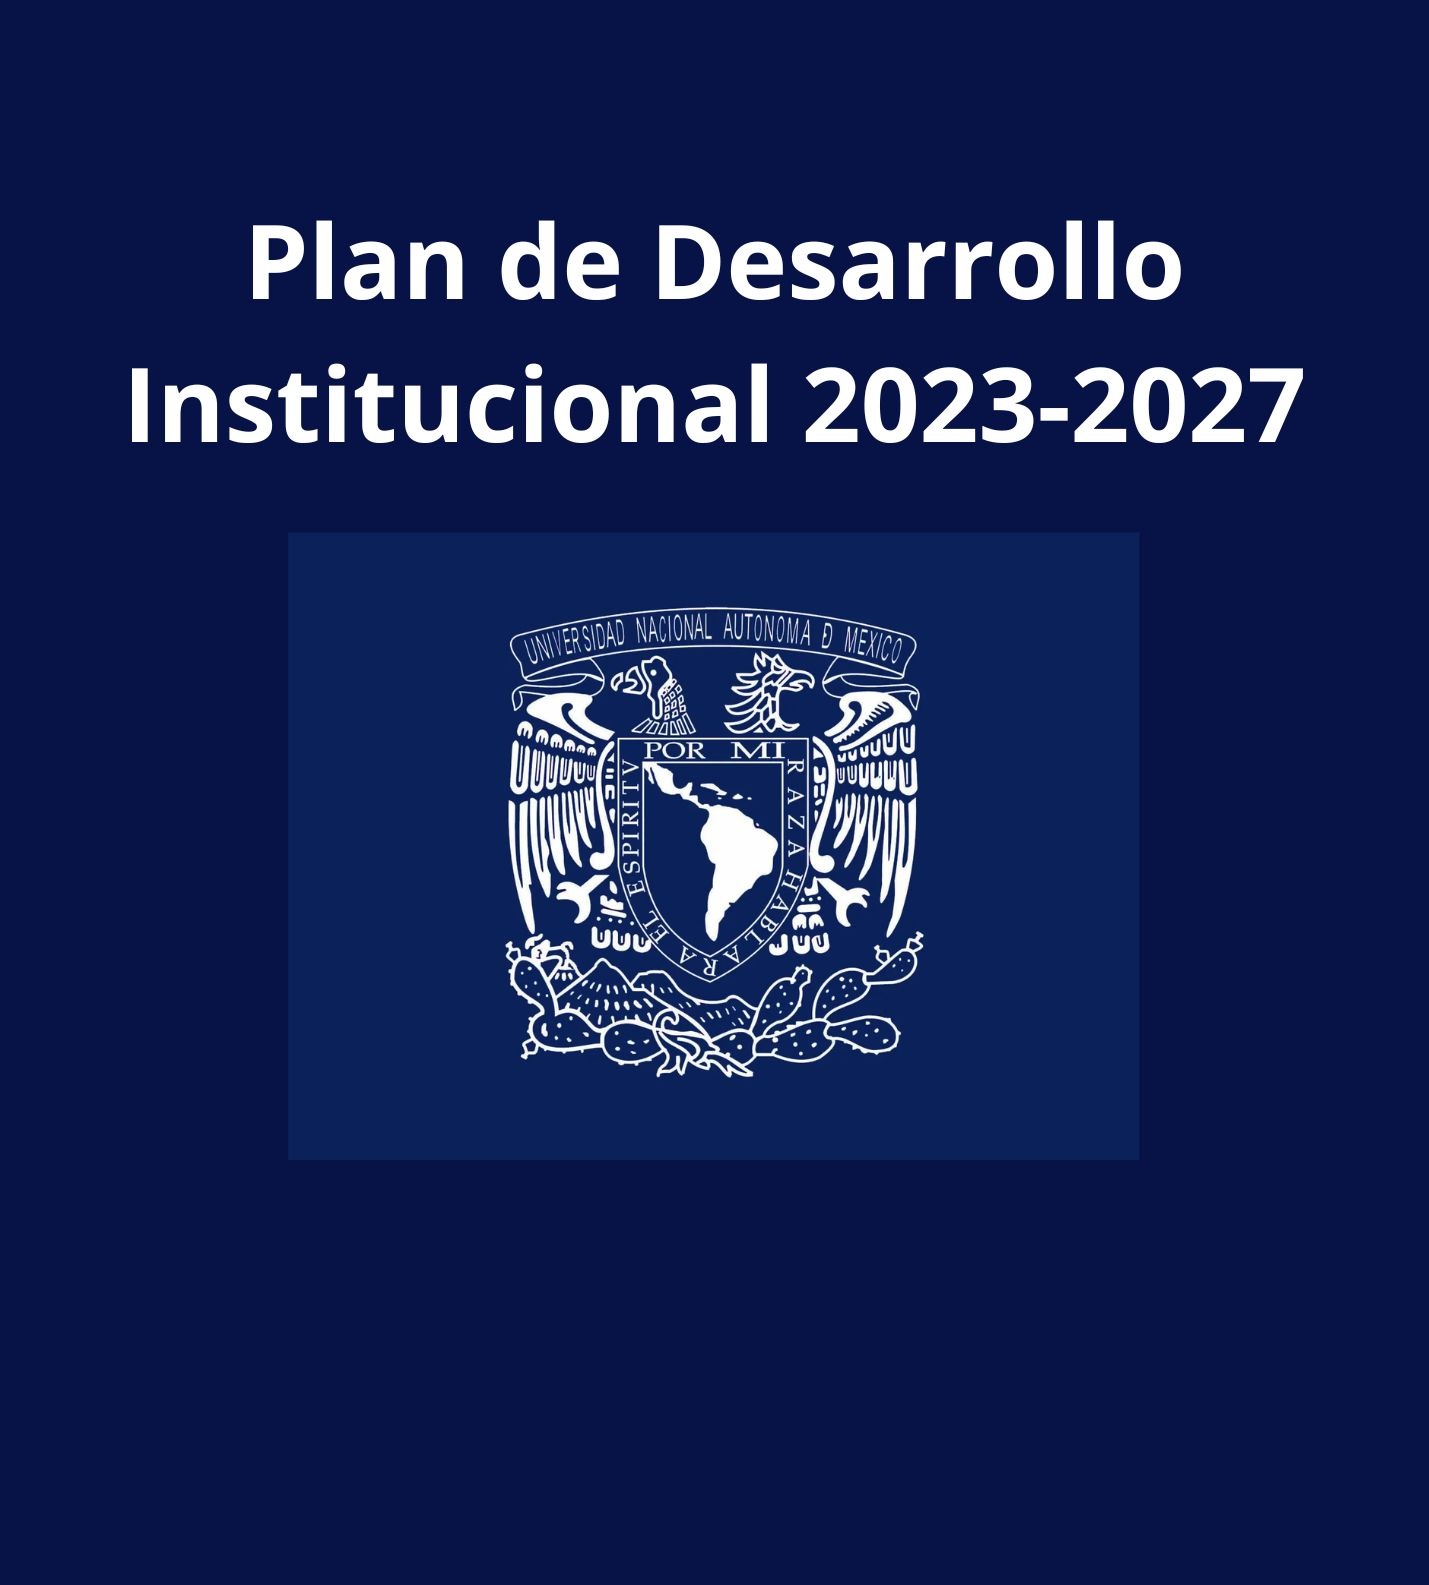 PLAN DE DESARROLLO INSTITUCIONAL 2023-2027